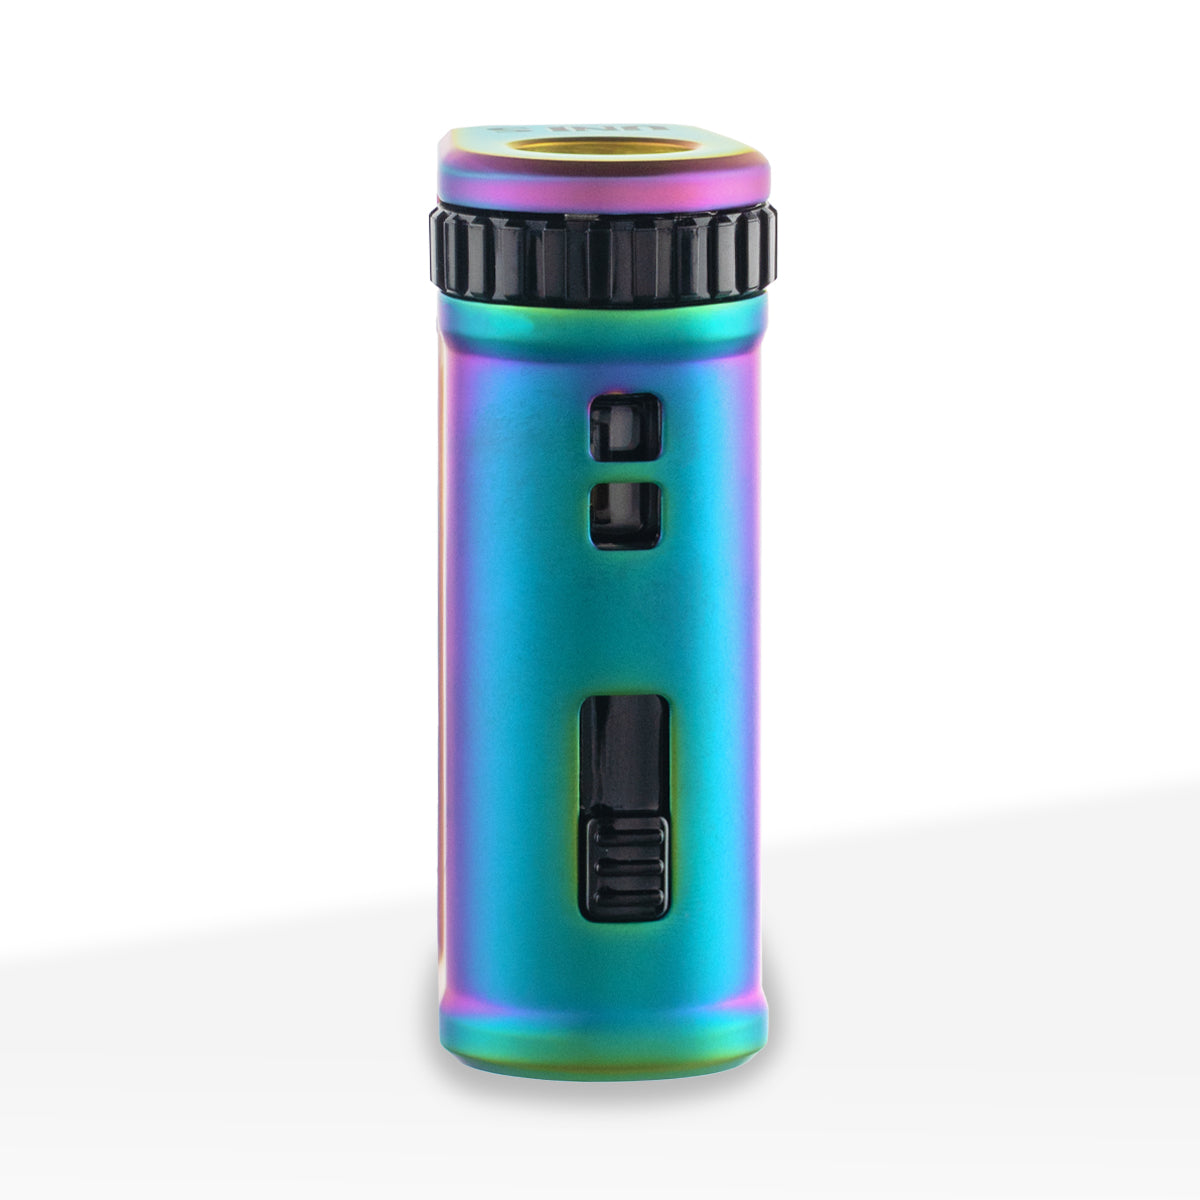 Wulf Mods UNI S. | Adjustable Cartridge Vaporizer - Full Color